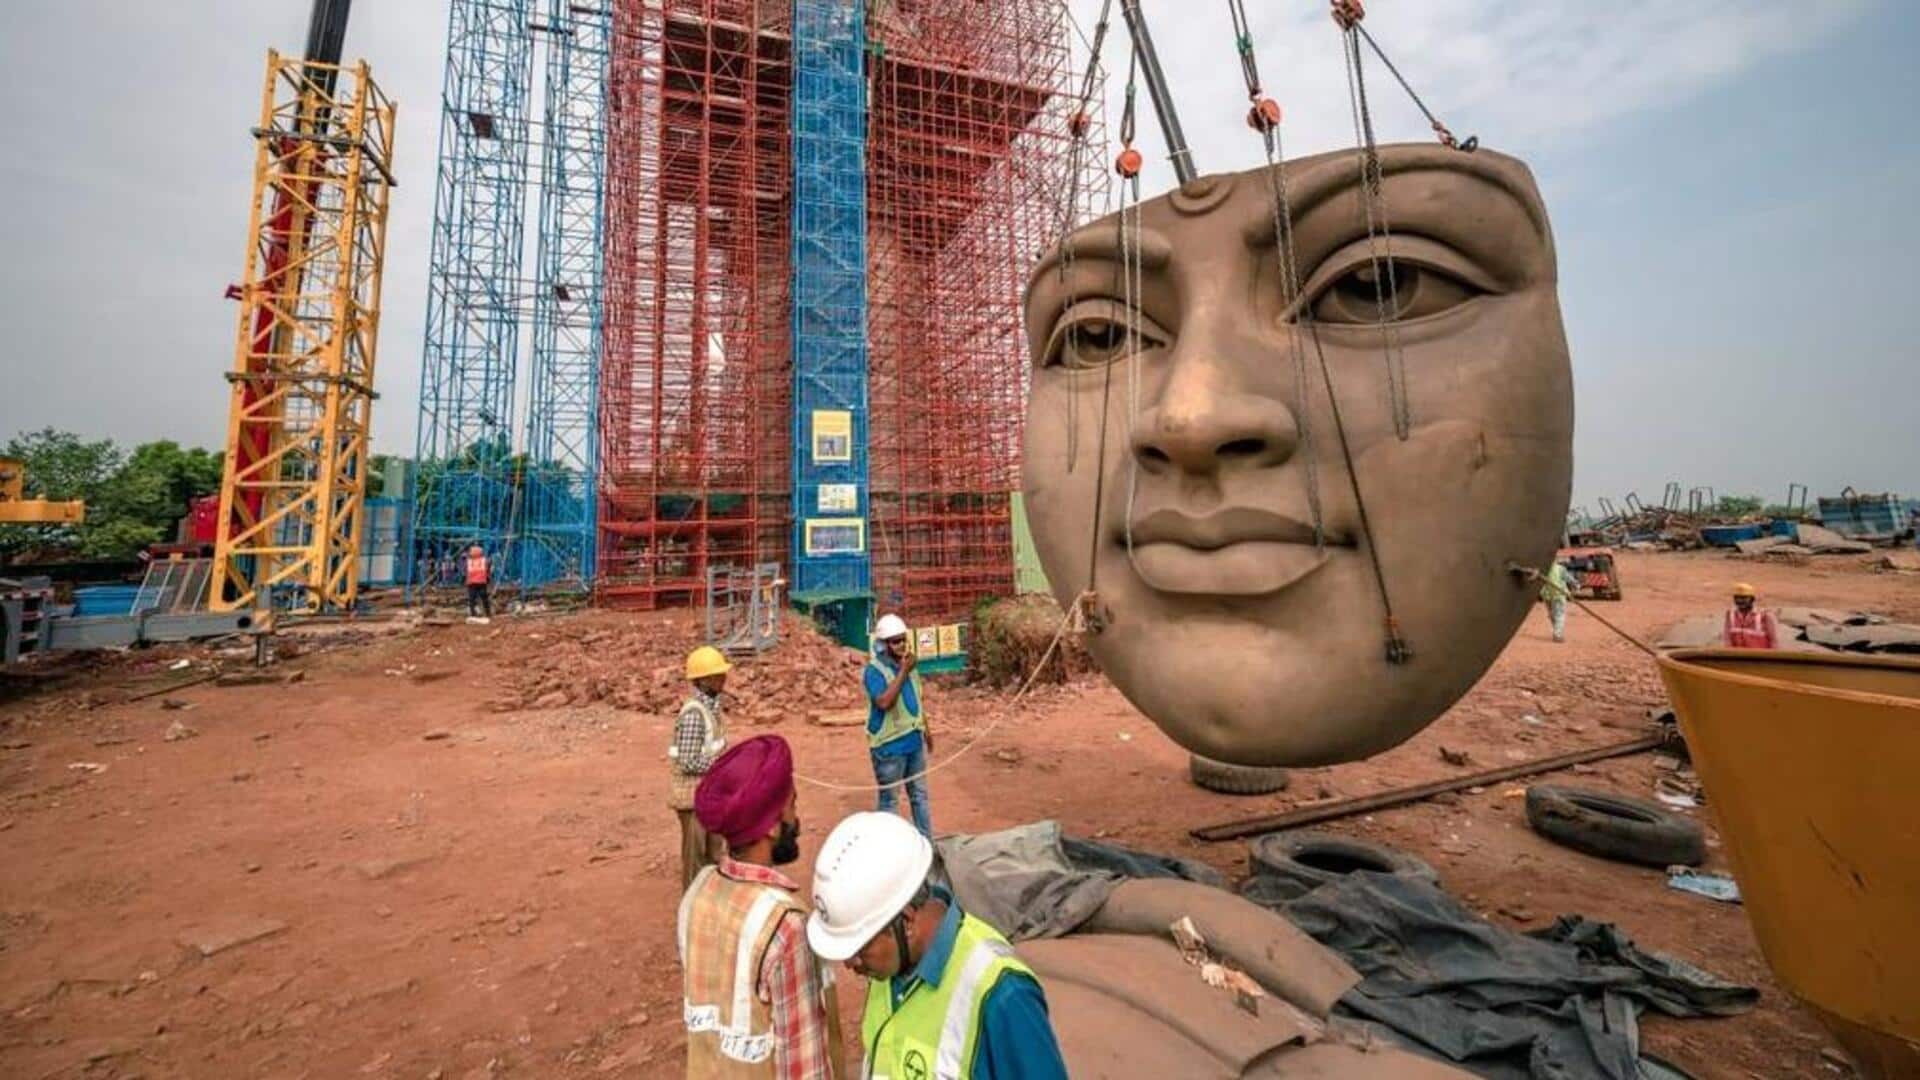 मध्य प्रदेश: ओंकारेश्वर में शंकराचार्य की 108 फीट ऊंची प्रतिमा तैयार, प्रधानमंत्री करेंगे उद्घाटन; देखें वीडियो